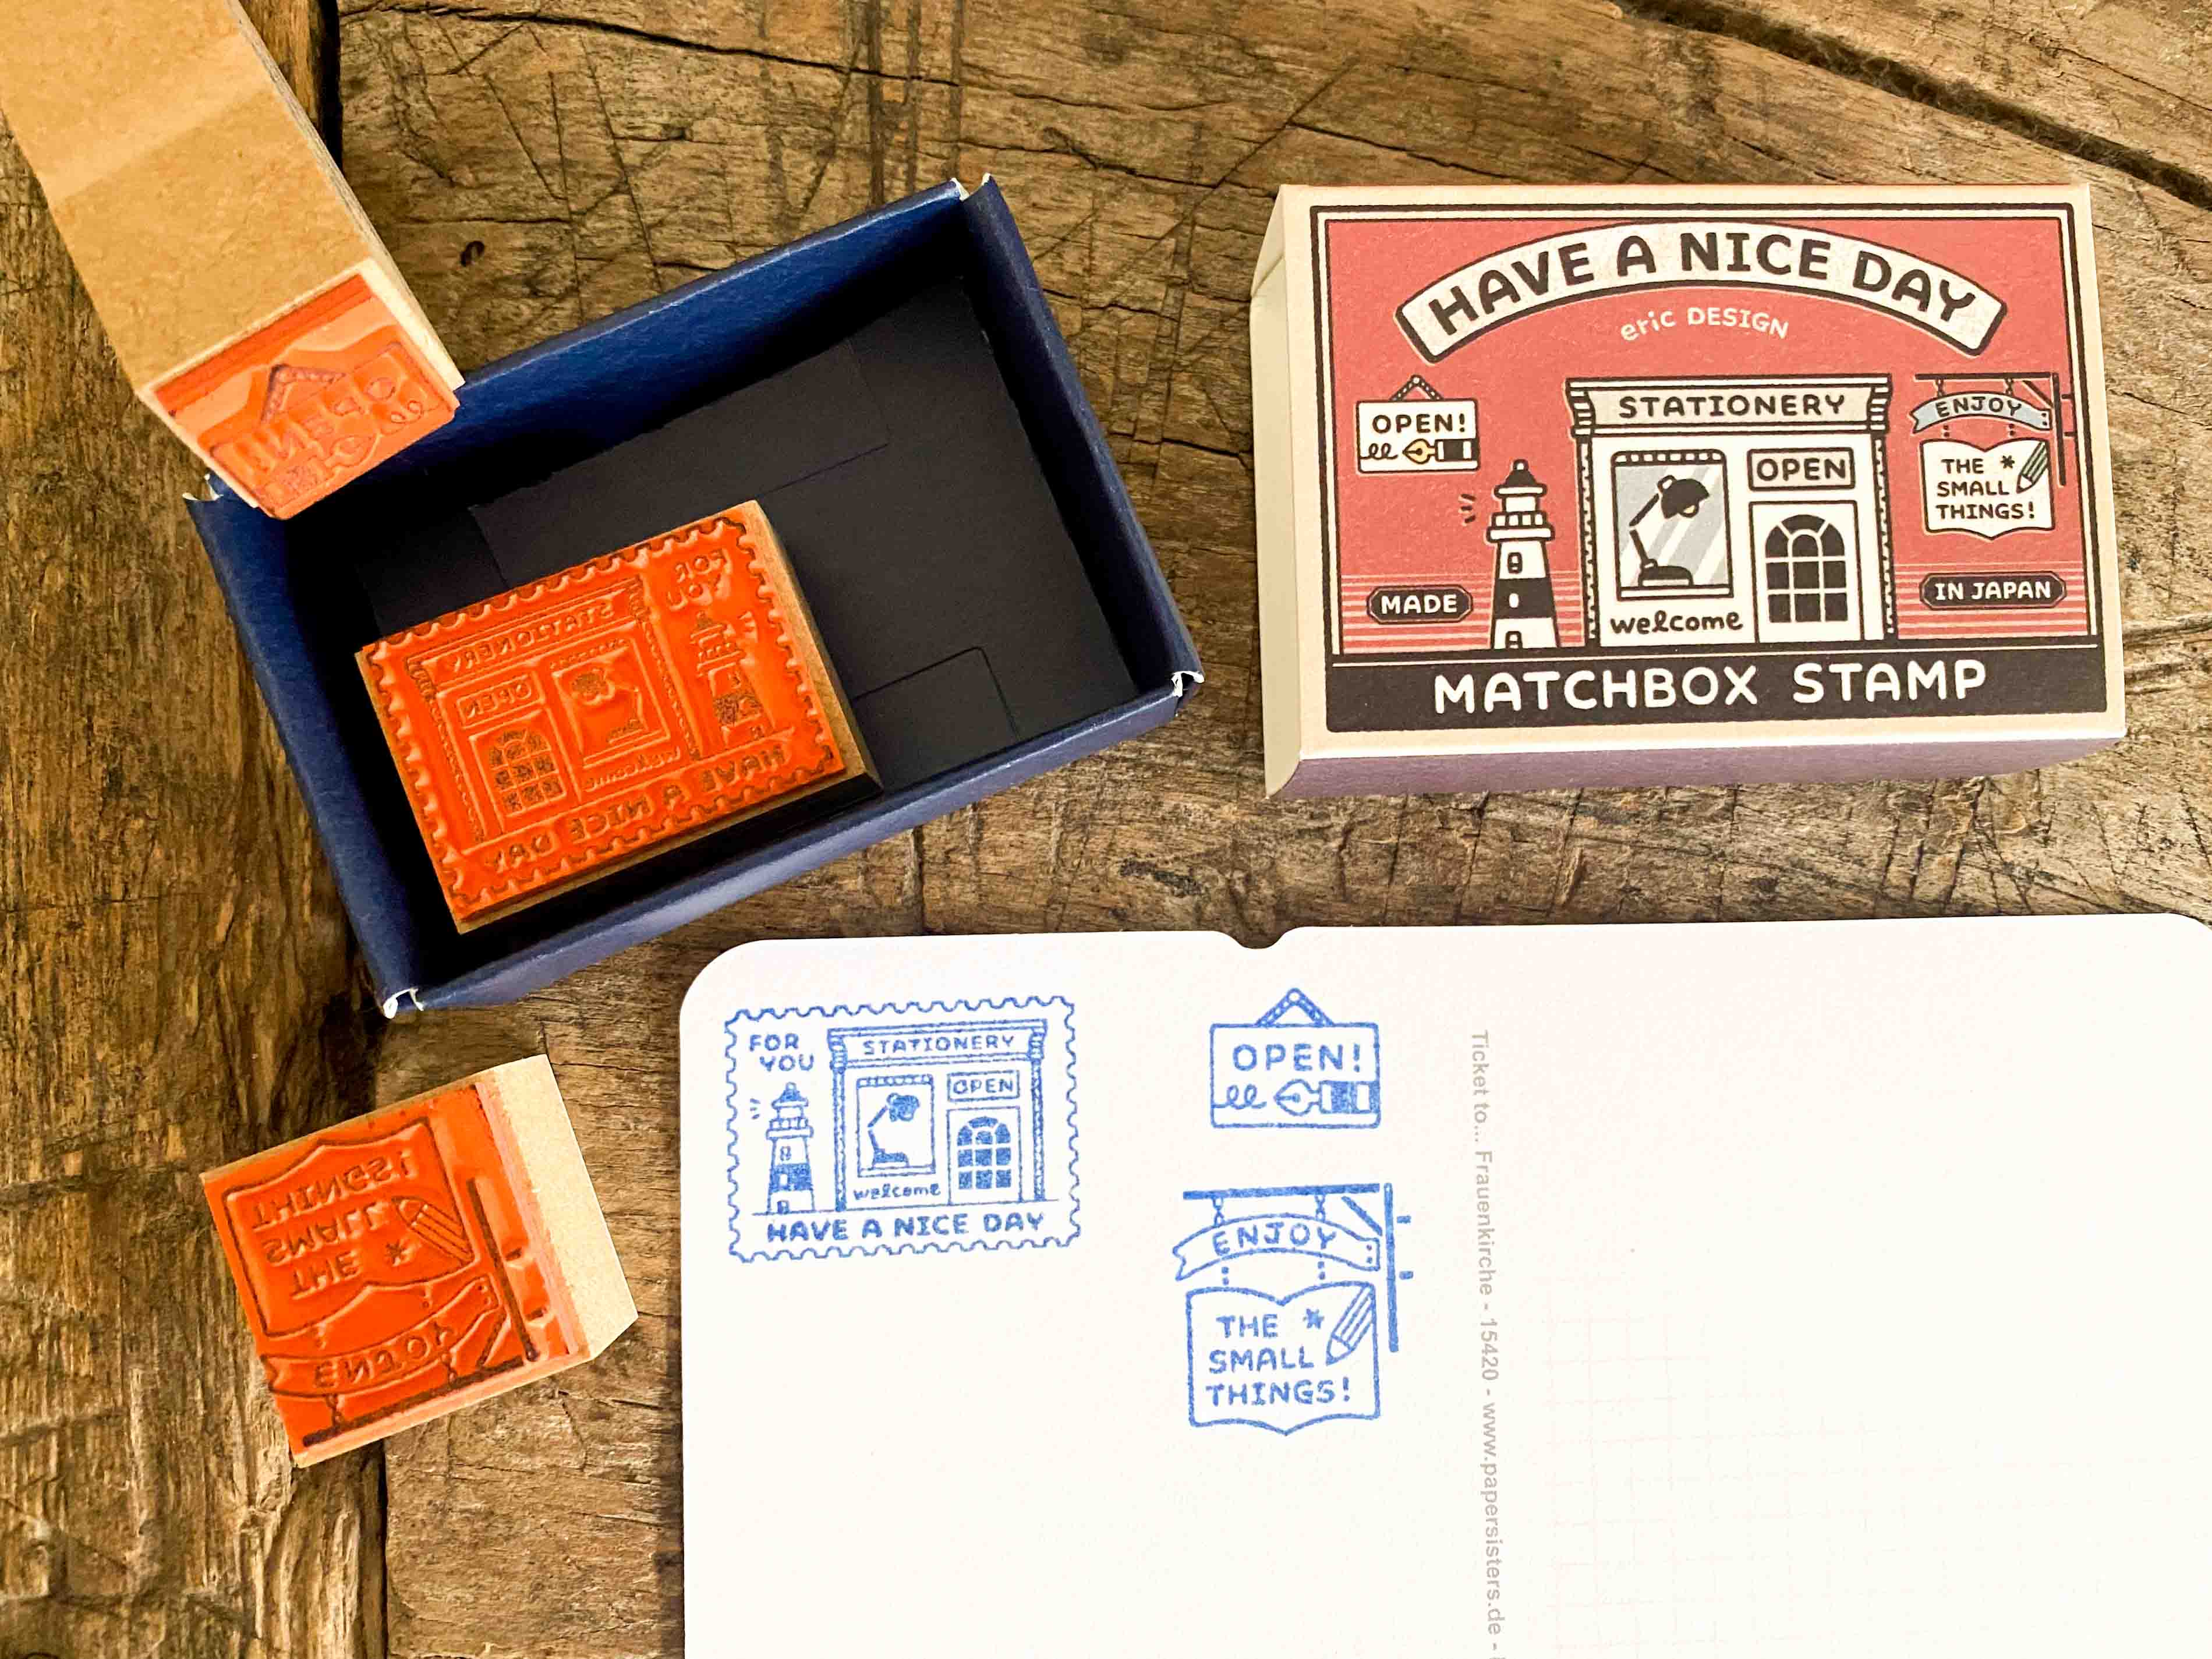 Three Stamp Set "Stationery Store" Matchbox Stamps